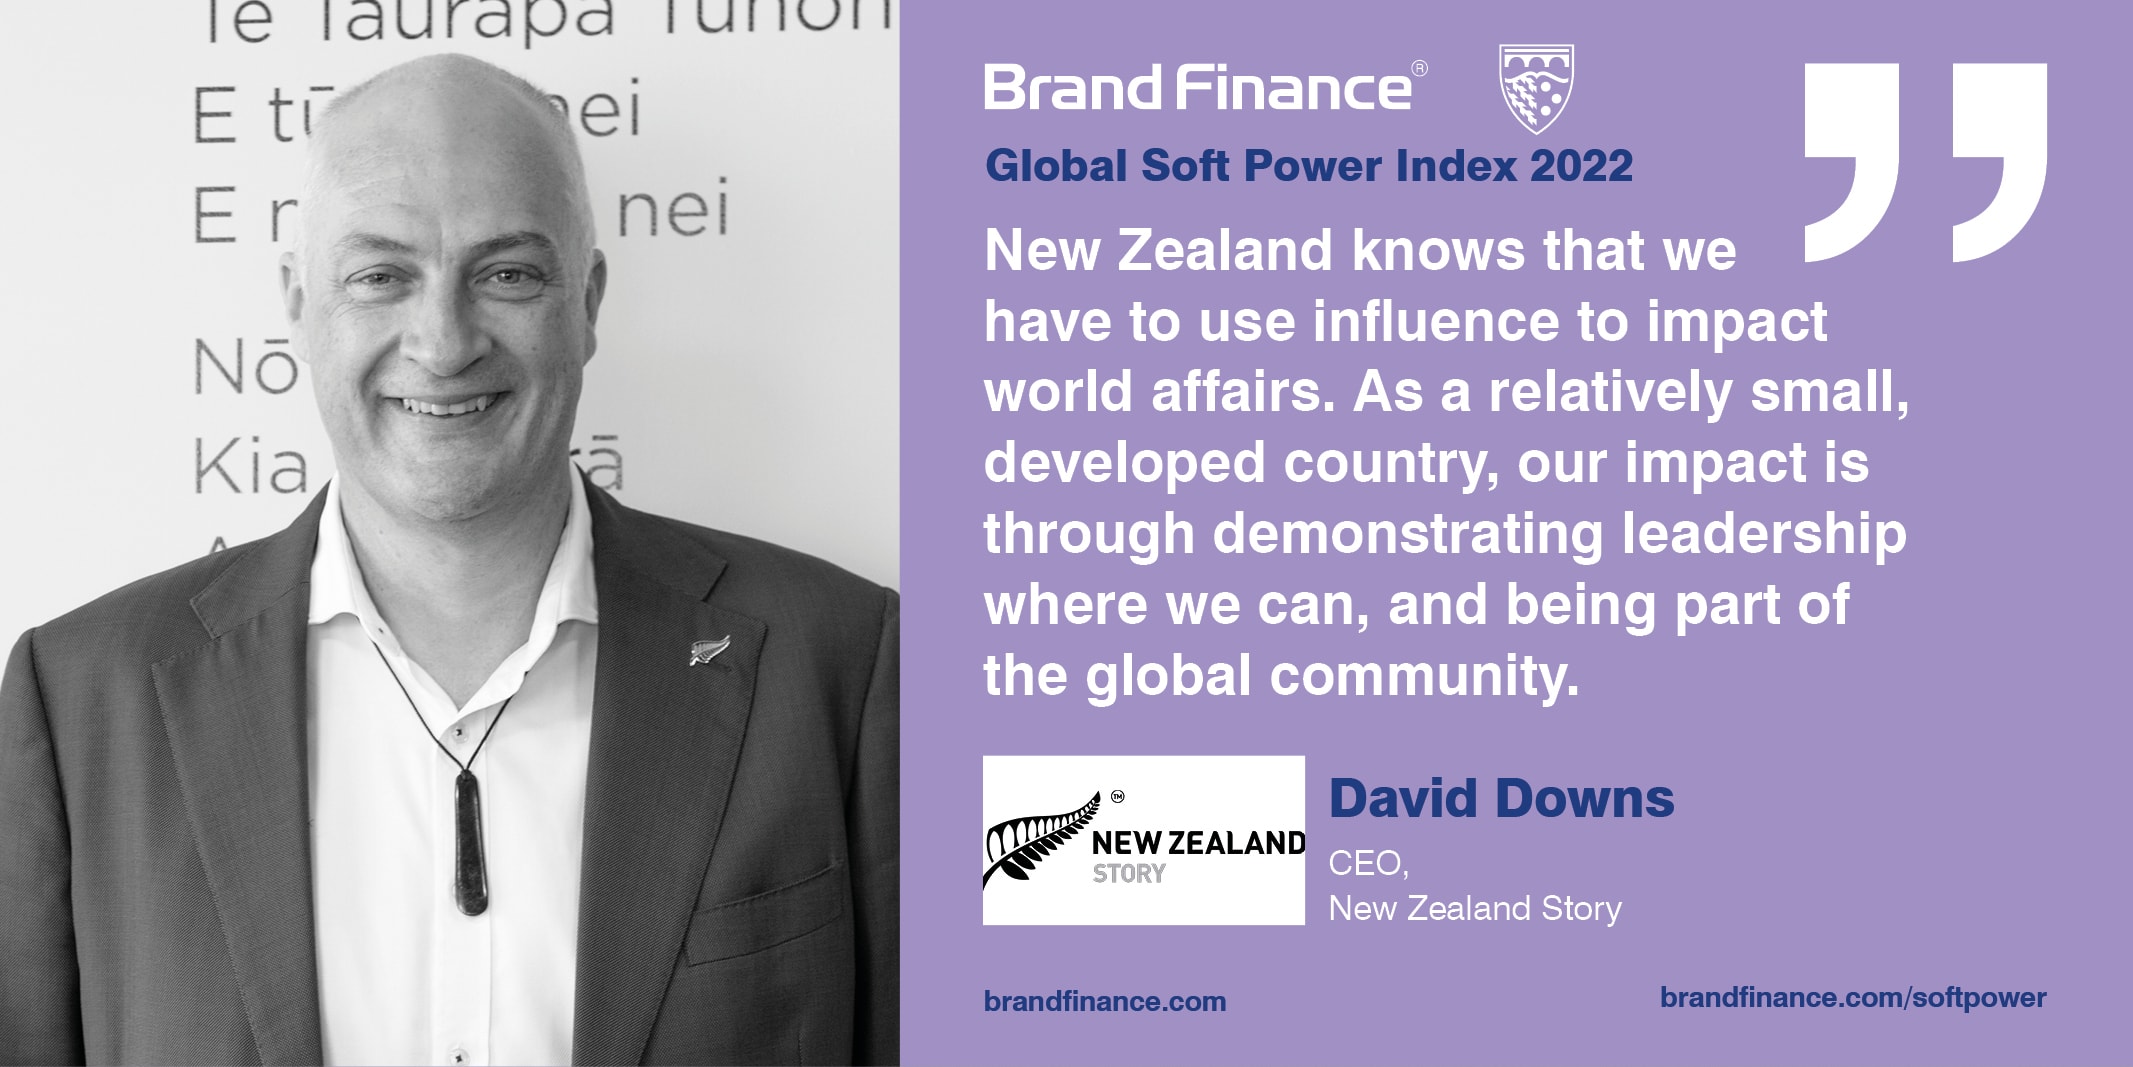 David Downs, CEO, New Zealand Story